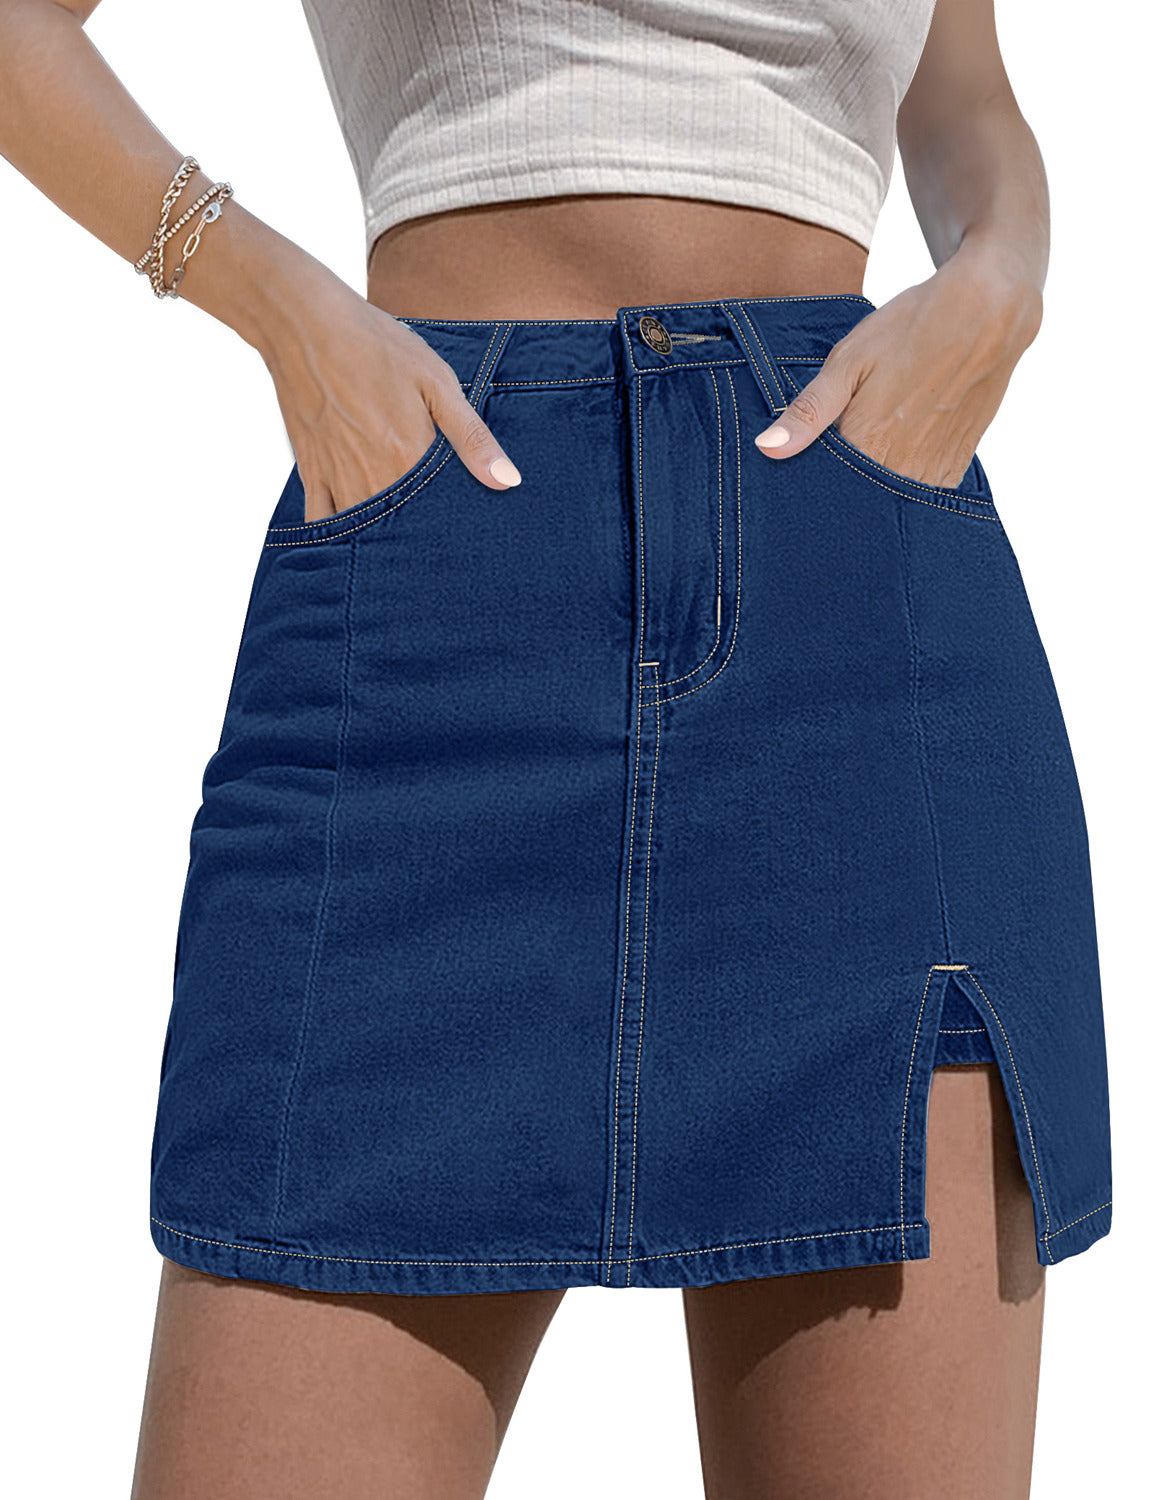 LC7811027-5-S, LC7811027-5-M, LC7811027-5-L, LC7811027-5-XL, LC7811027-5-2XL, Reef Blue Women's Casual Denim Skirt High Waist Casual Mini Skirts